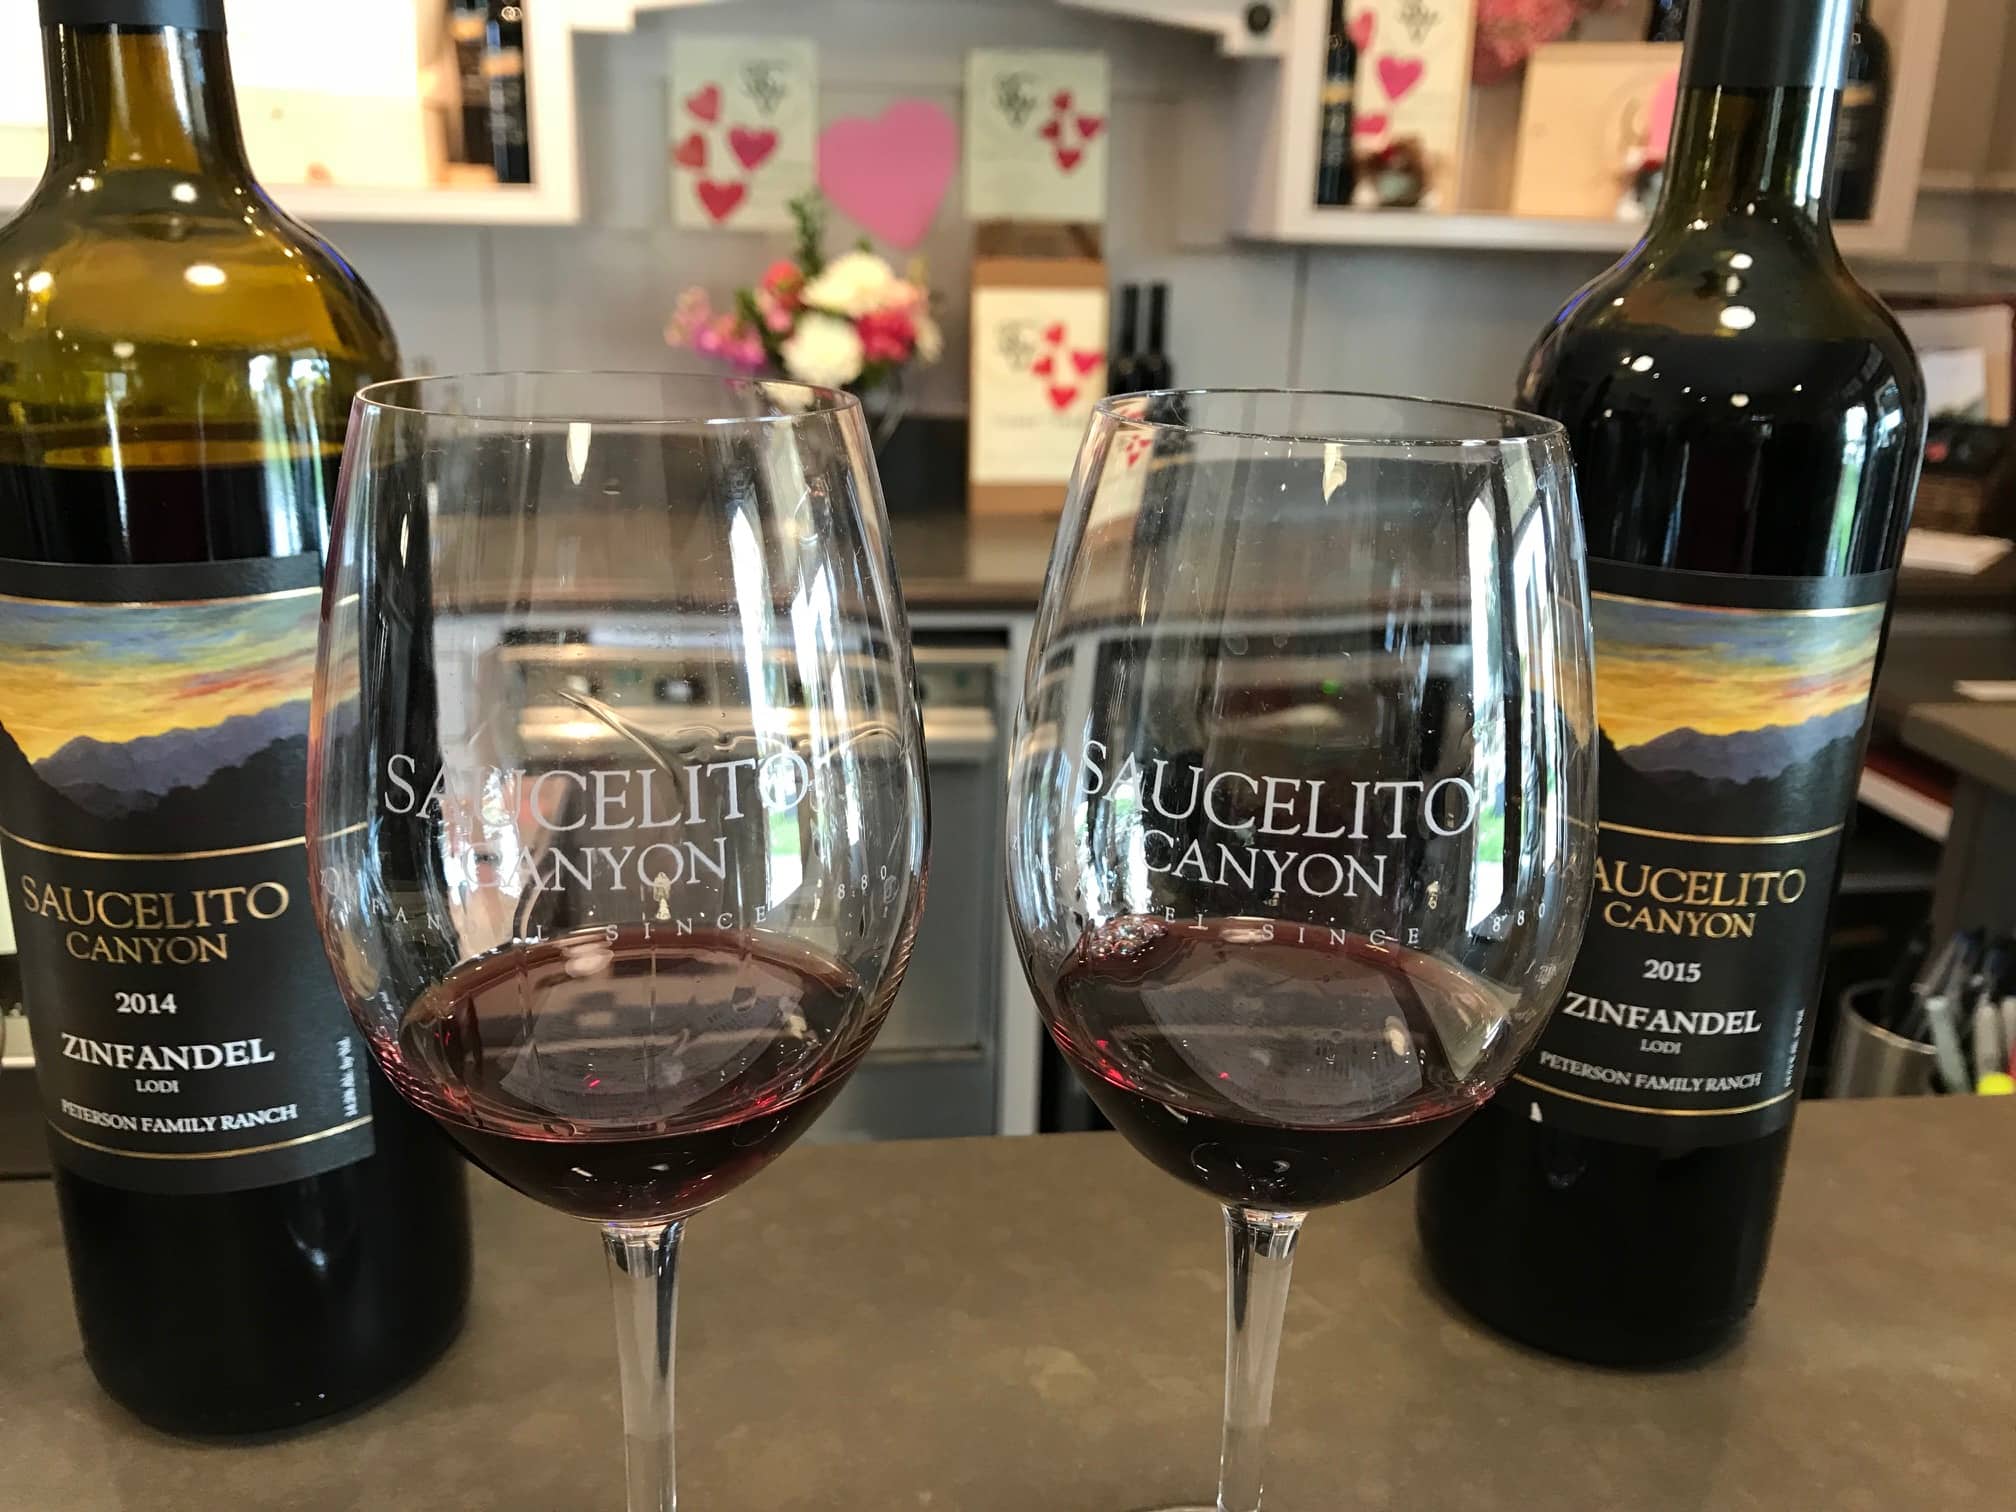 Saucelito Canyon wine glasses image